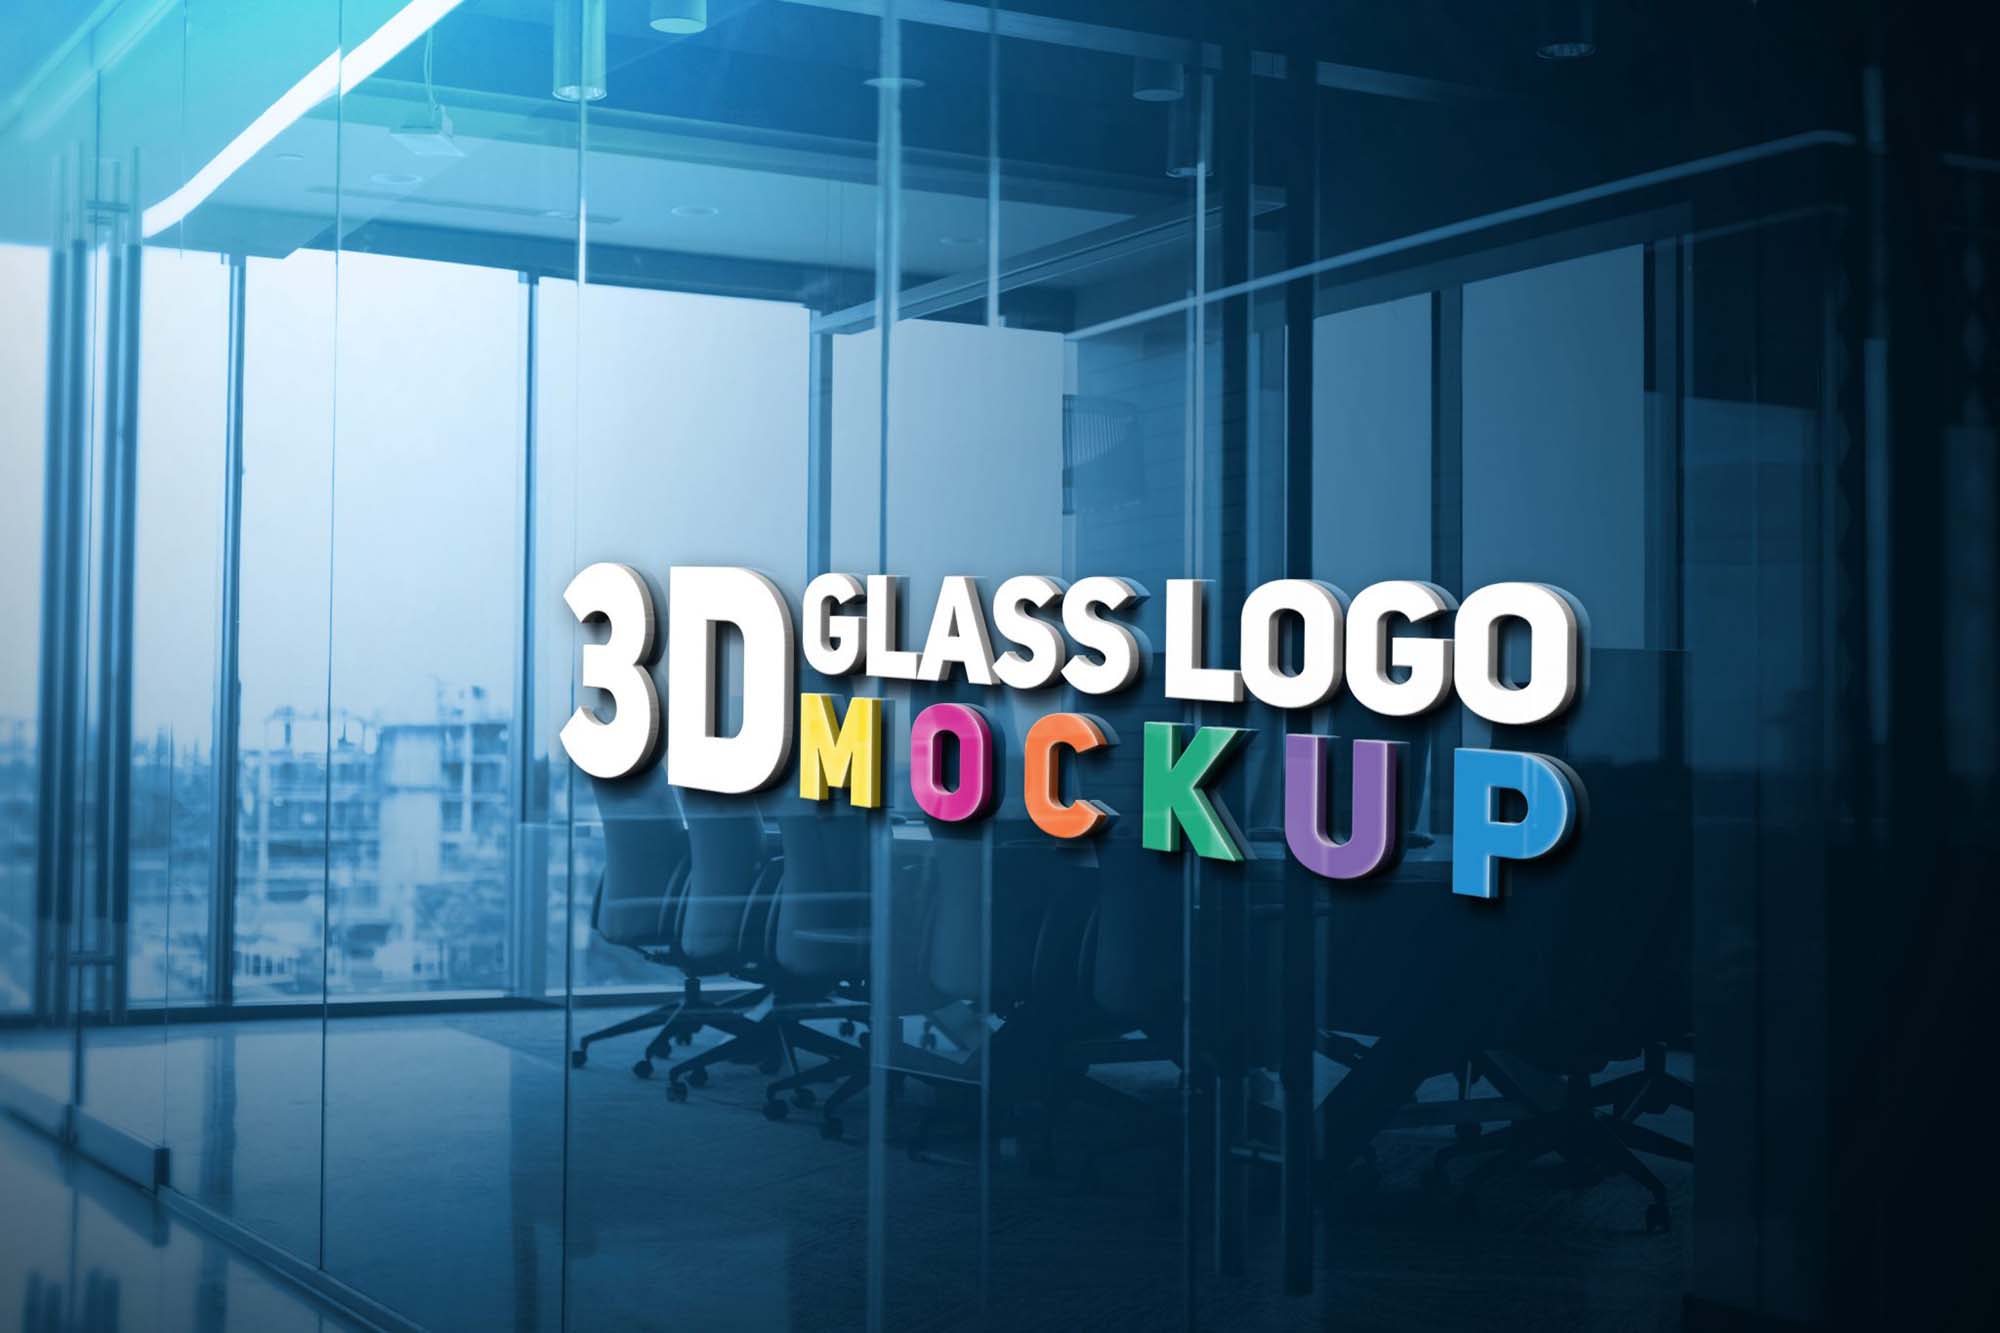 3d office glass logo mockup - nelobright